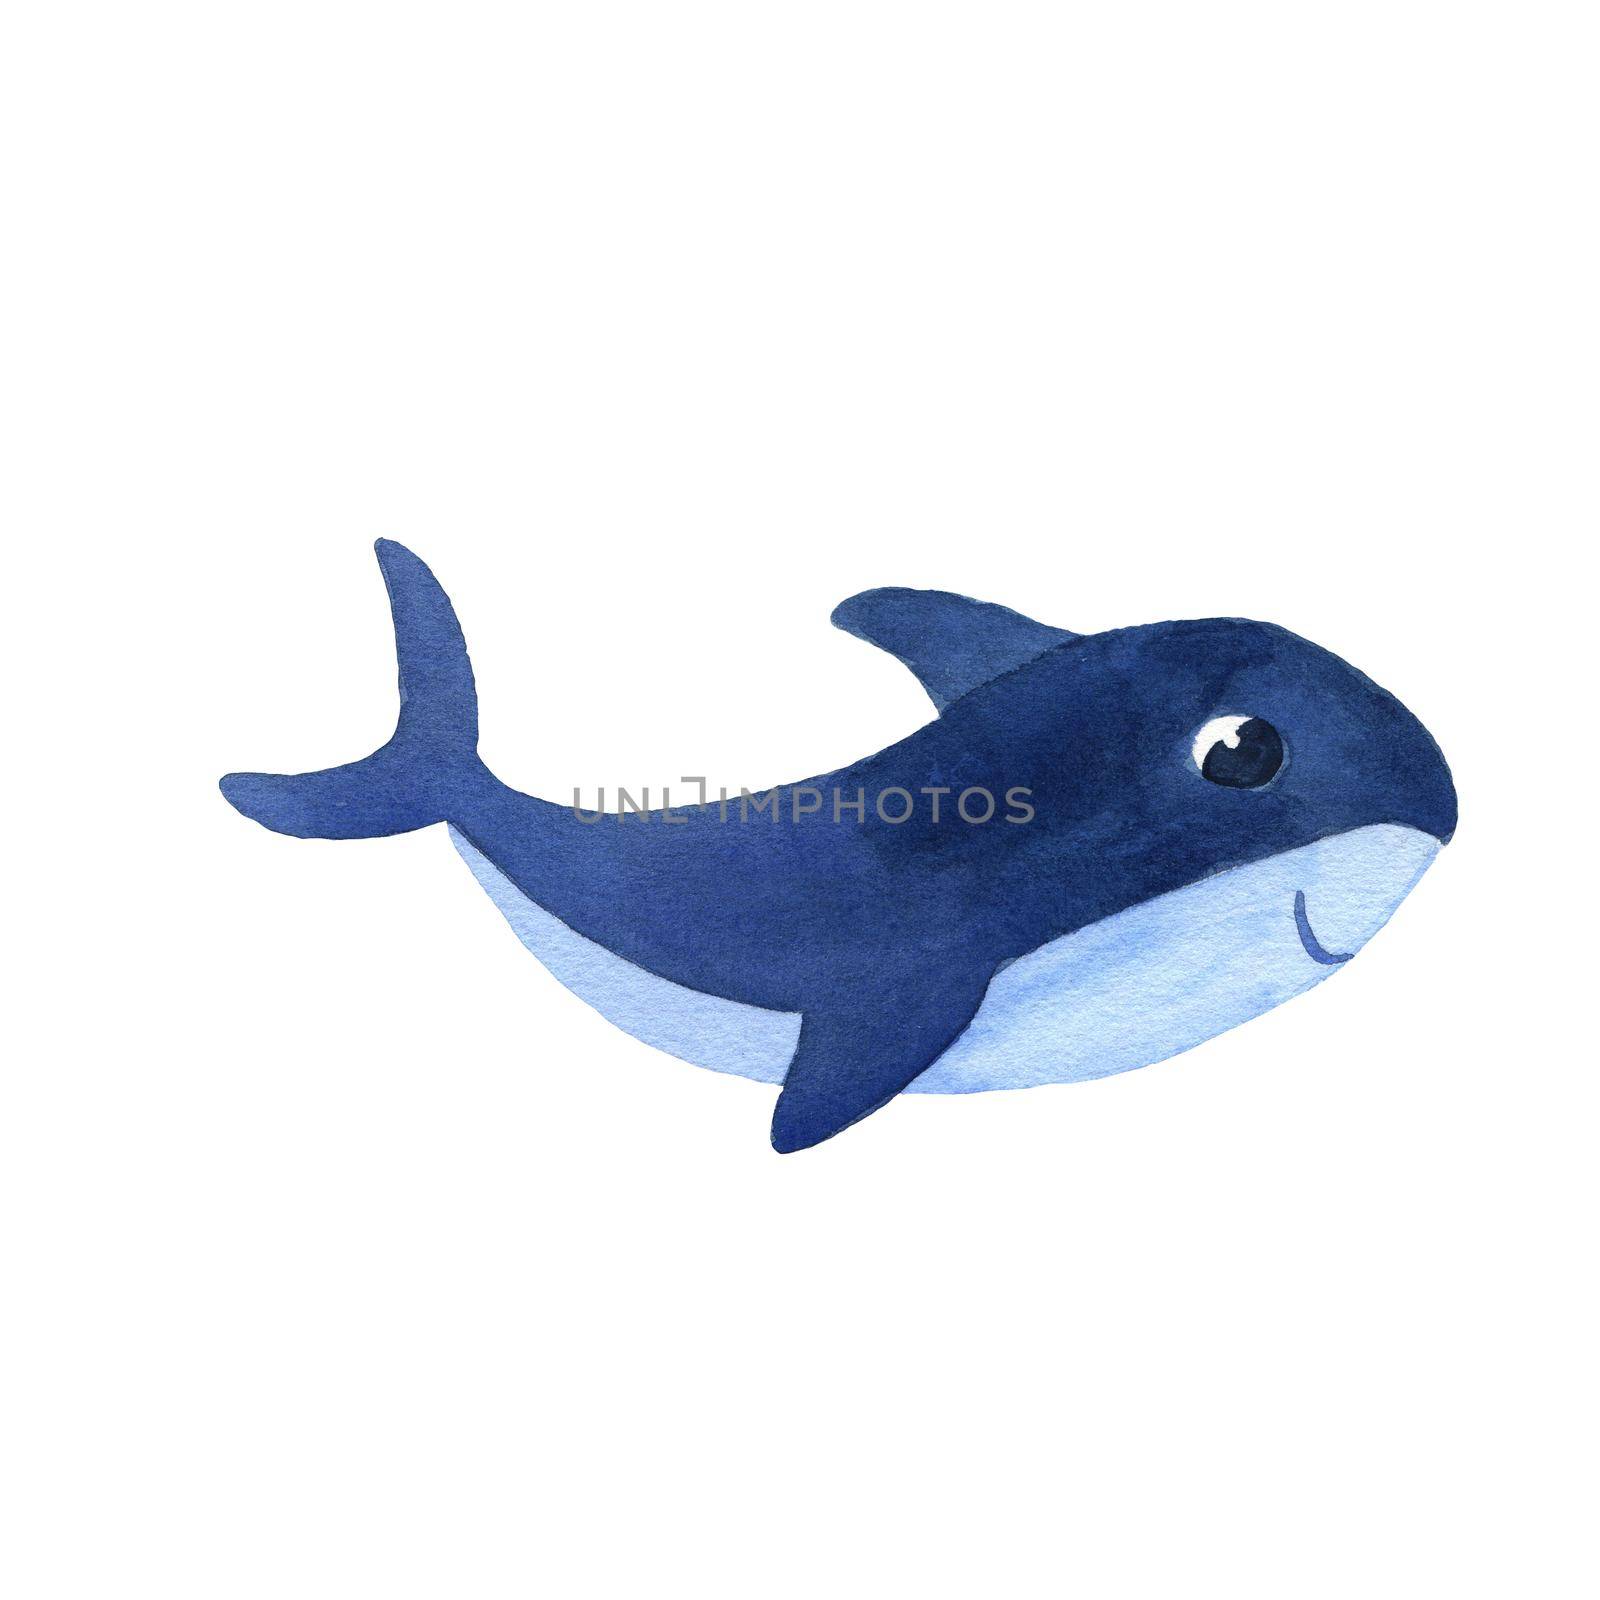 Watercolor cute blue baby shark. Drawing character sea animal